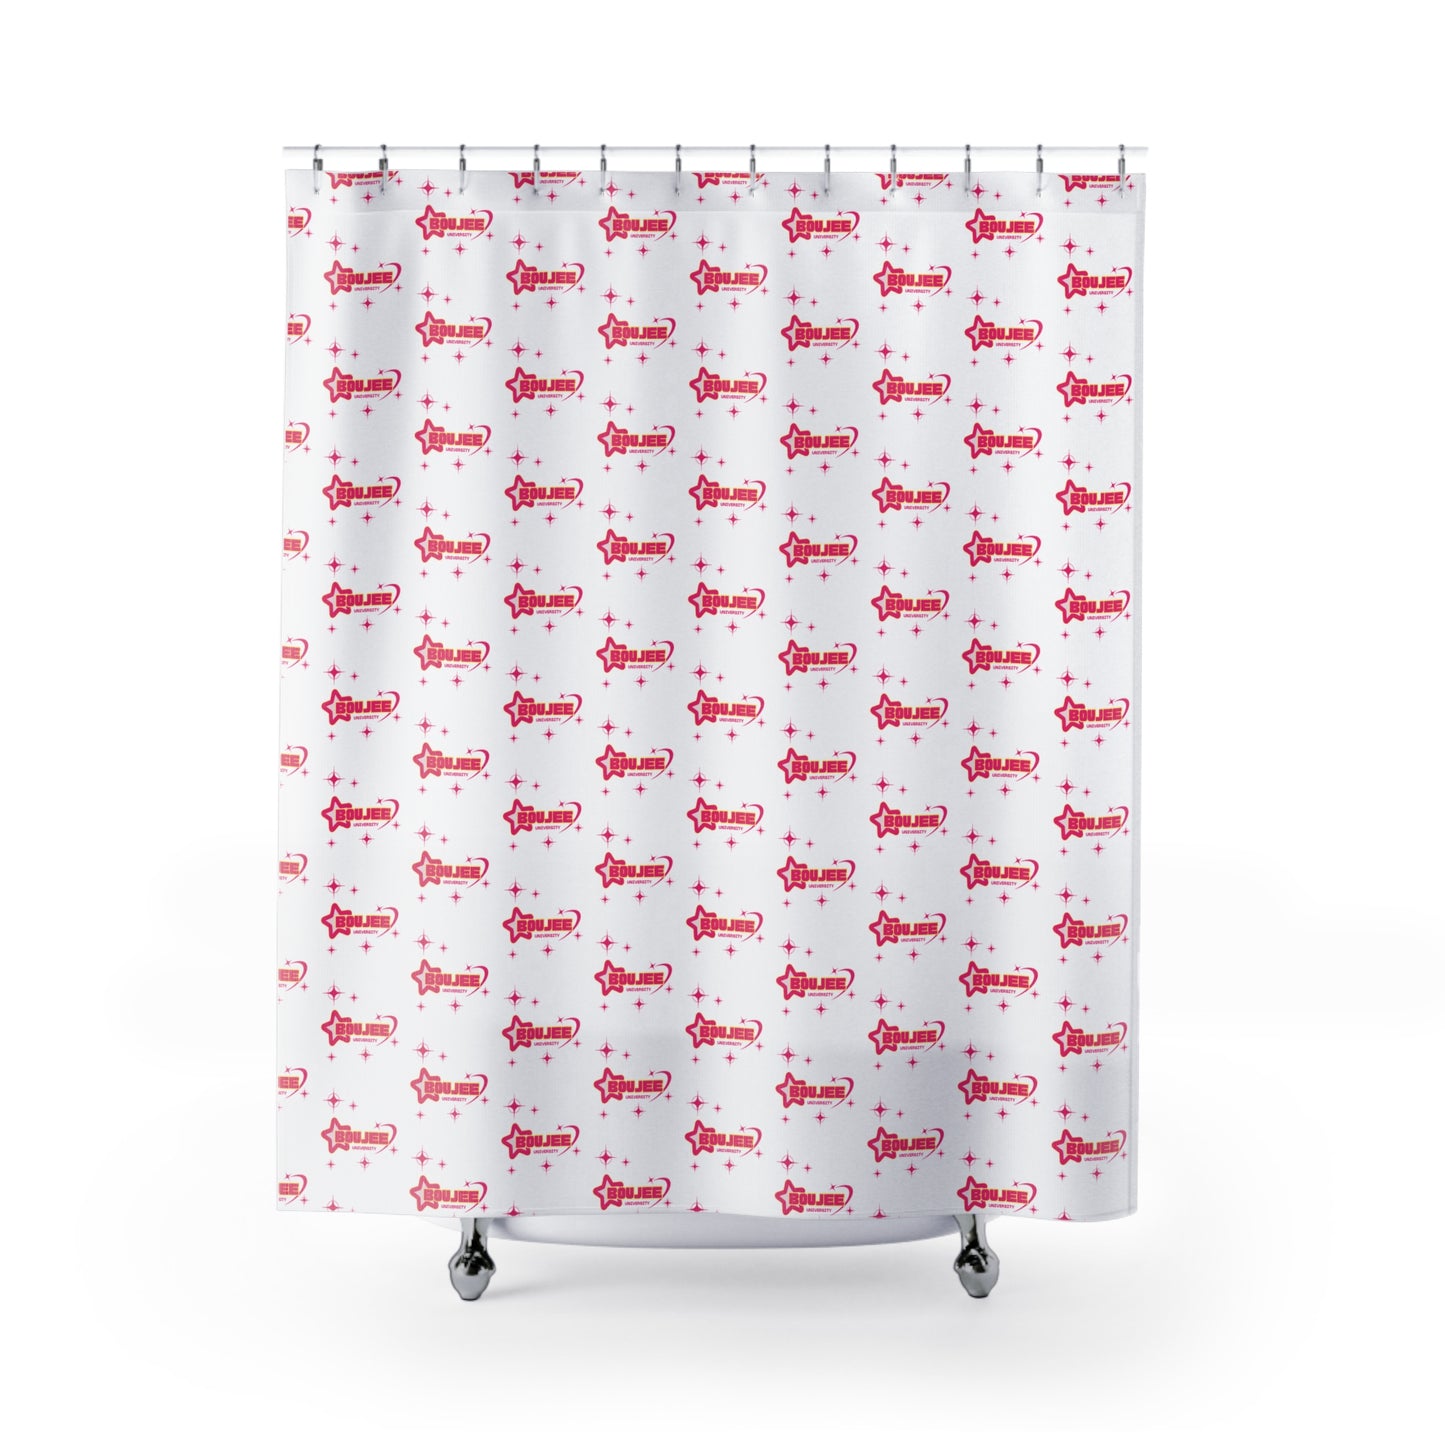 Boujee University Shower Curtains